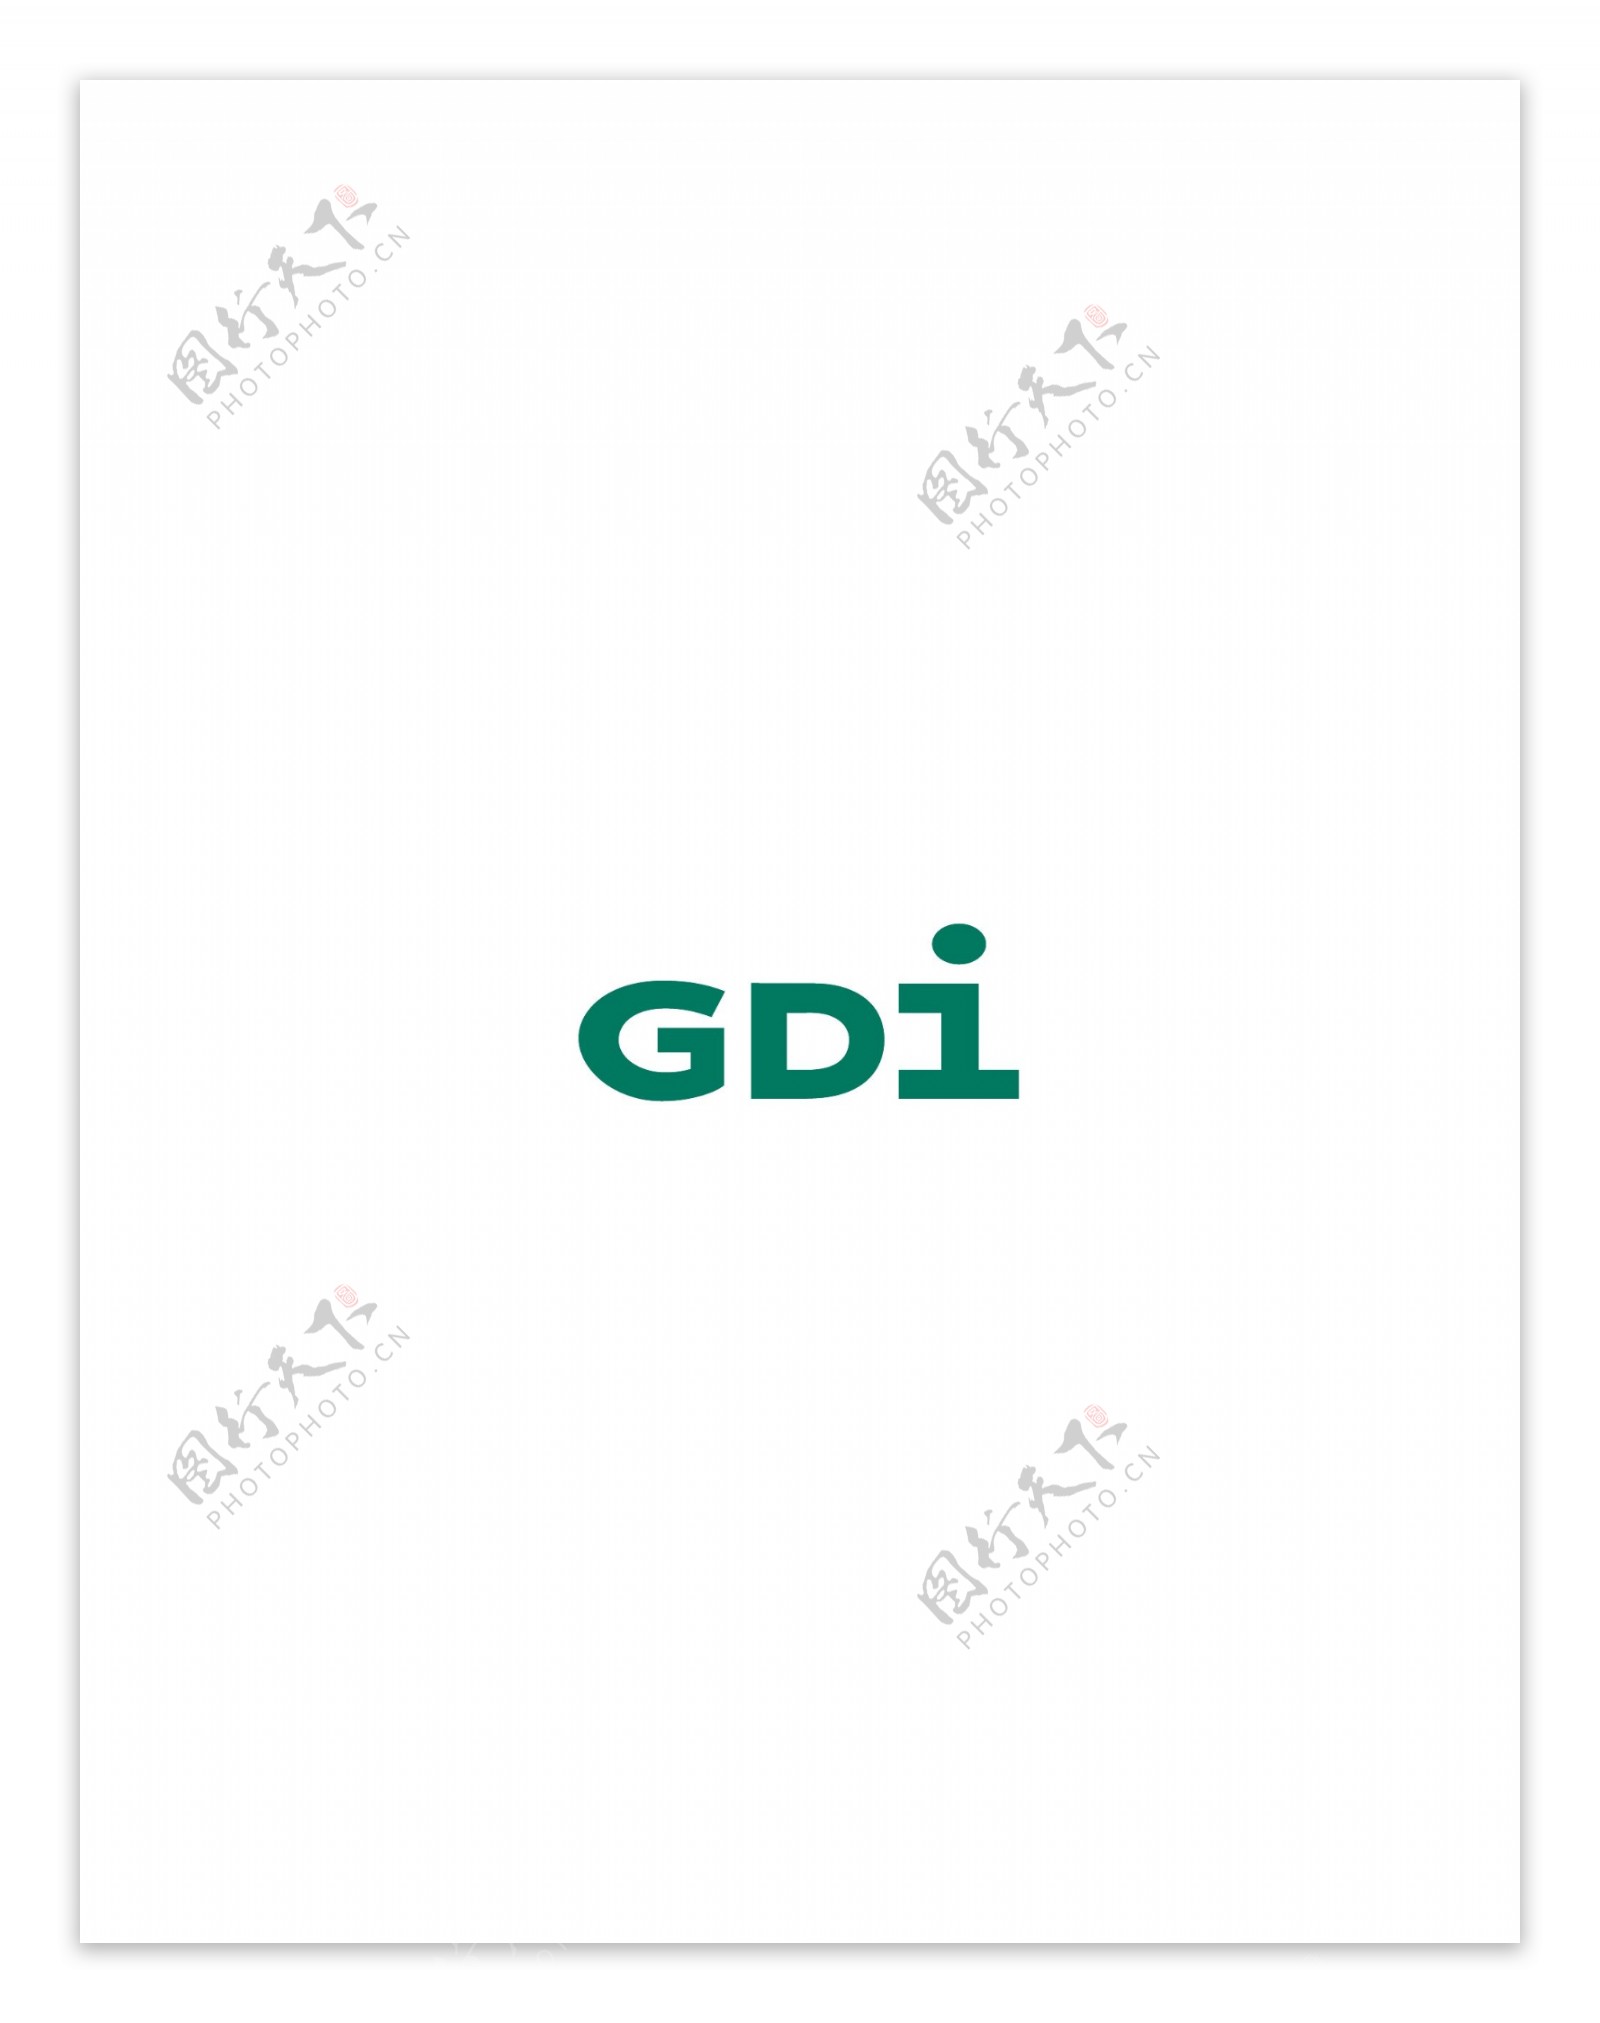 Gdilogo设计欣赏IT公司LOGO标志Gdi下载标志设计欣赏